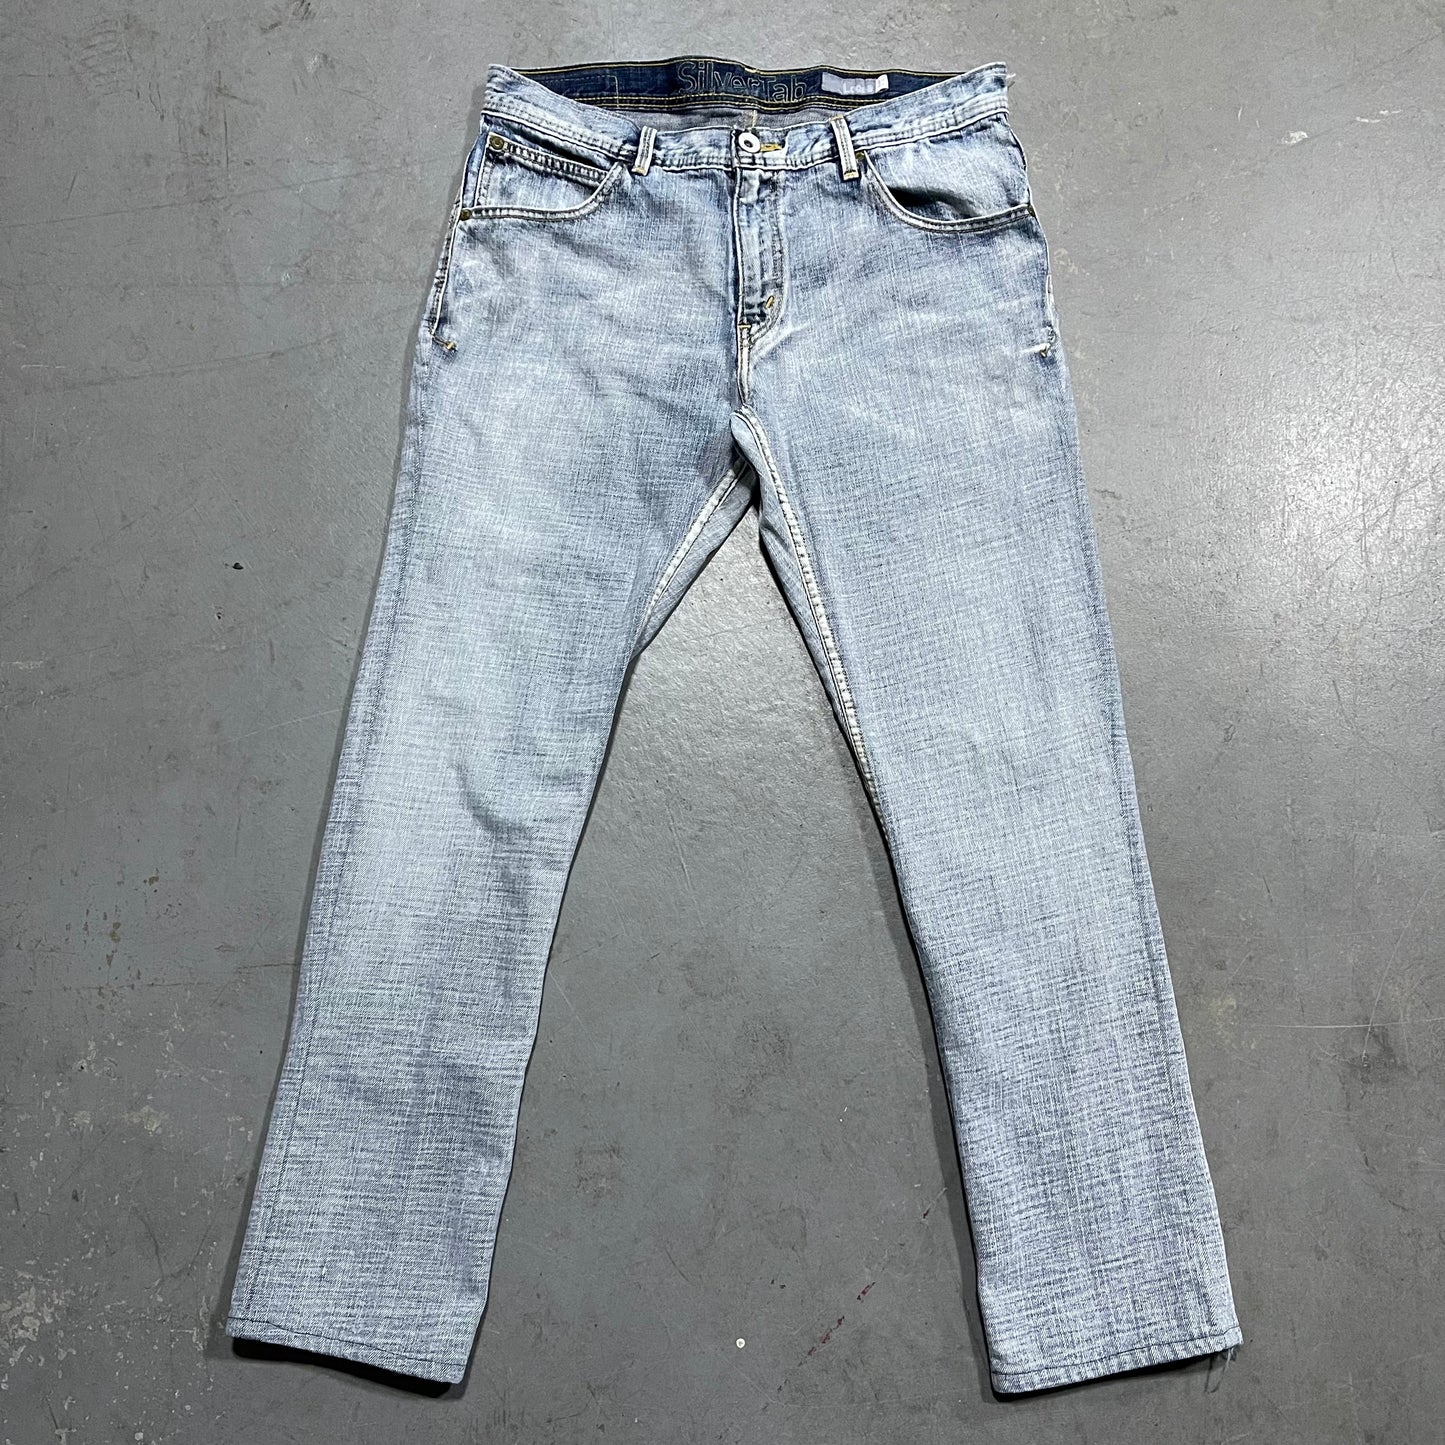 Y2K 0808 Levi’s Silvertab LOOSE jeans. Size 32x32